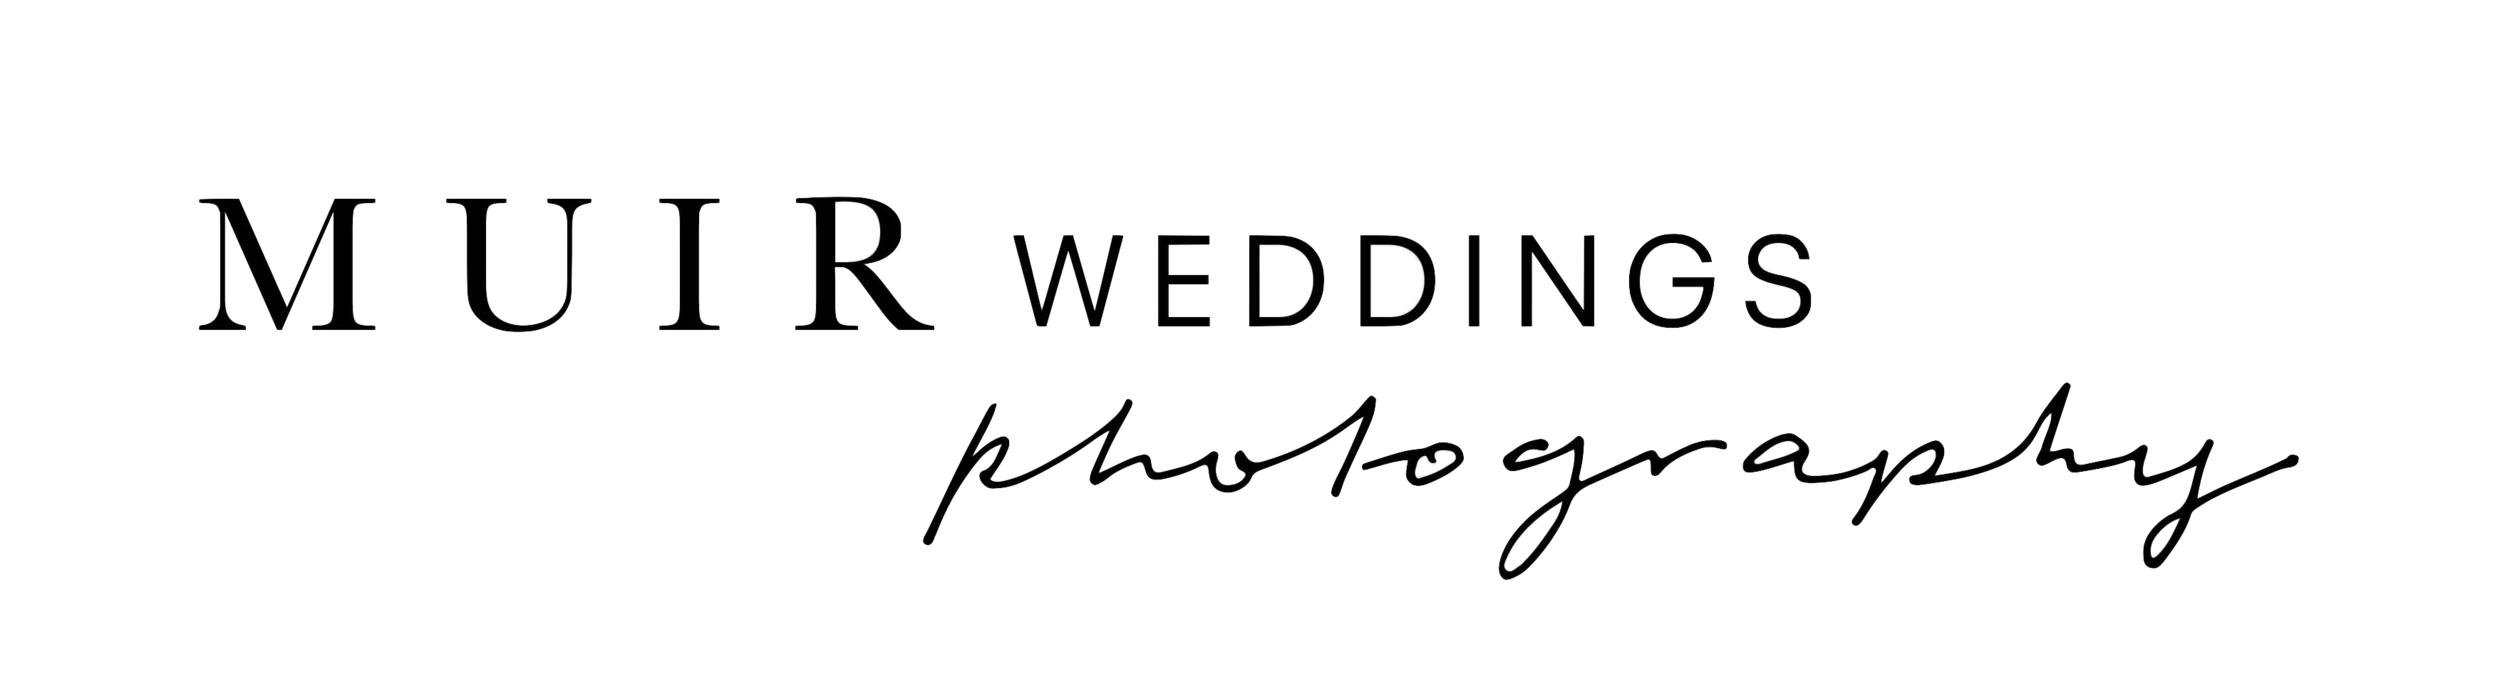 MUIR WEDDINGS | WEDDING PHOTOGRAPHY